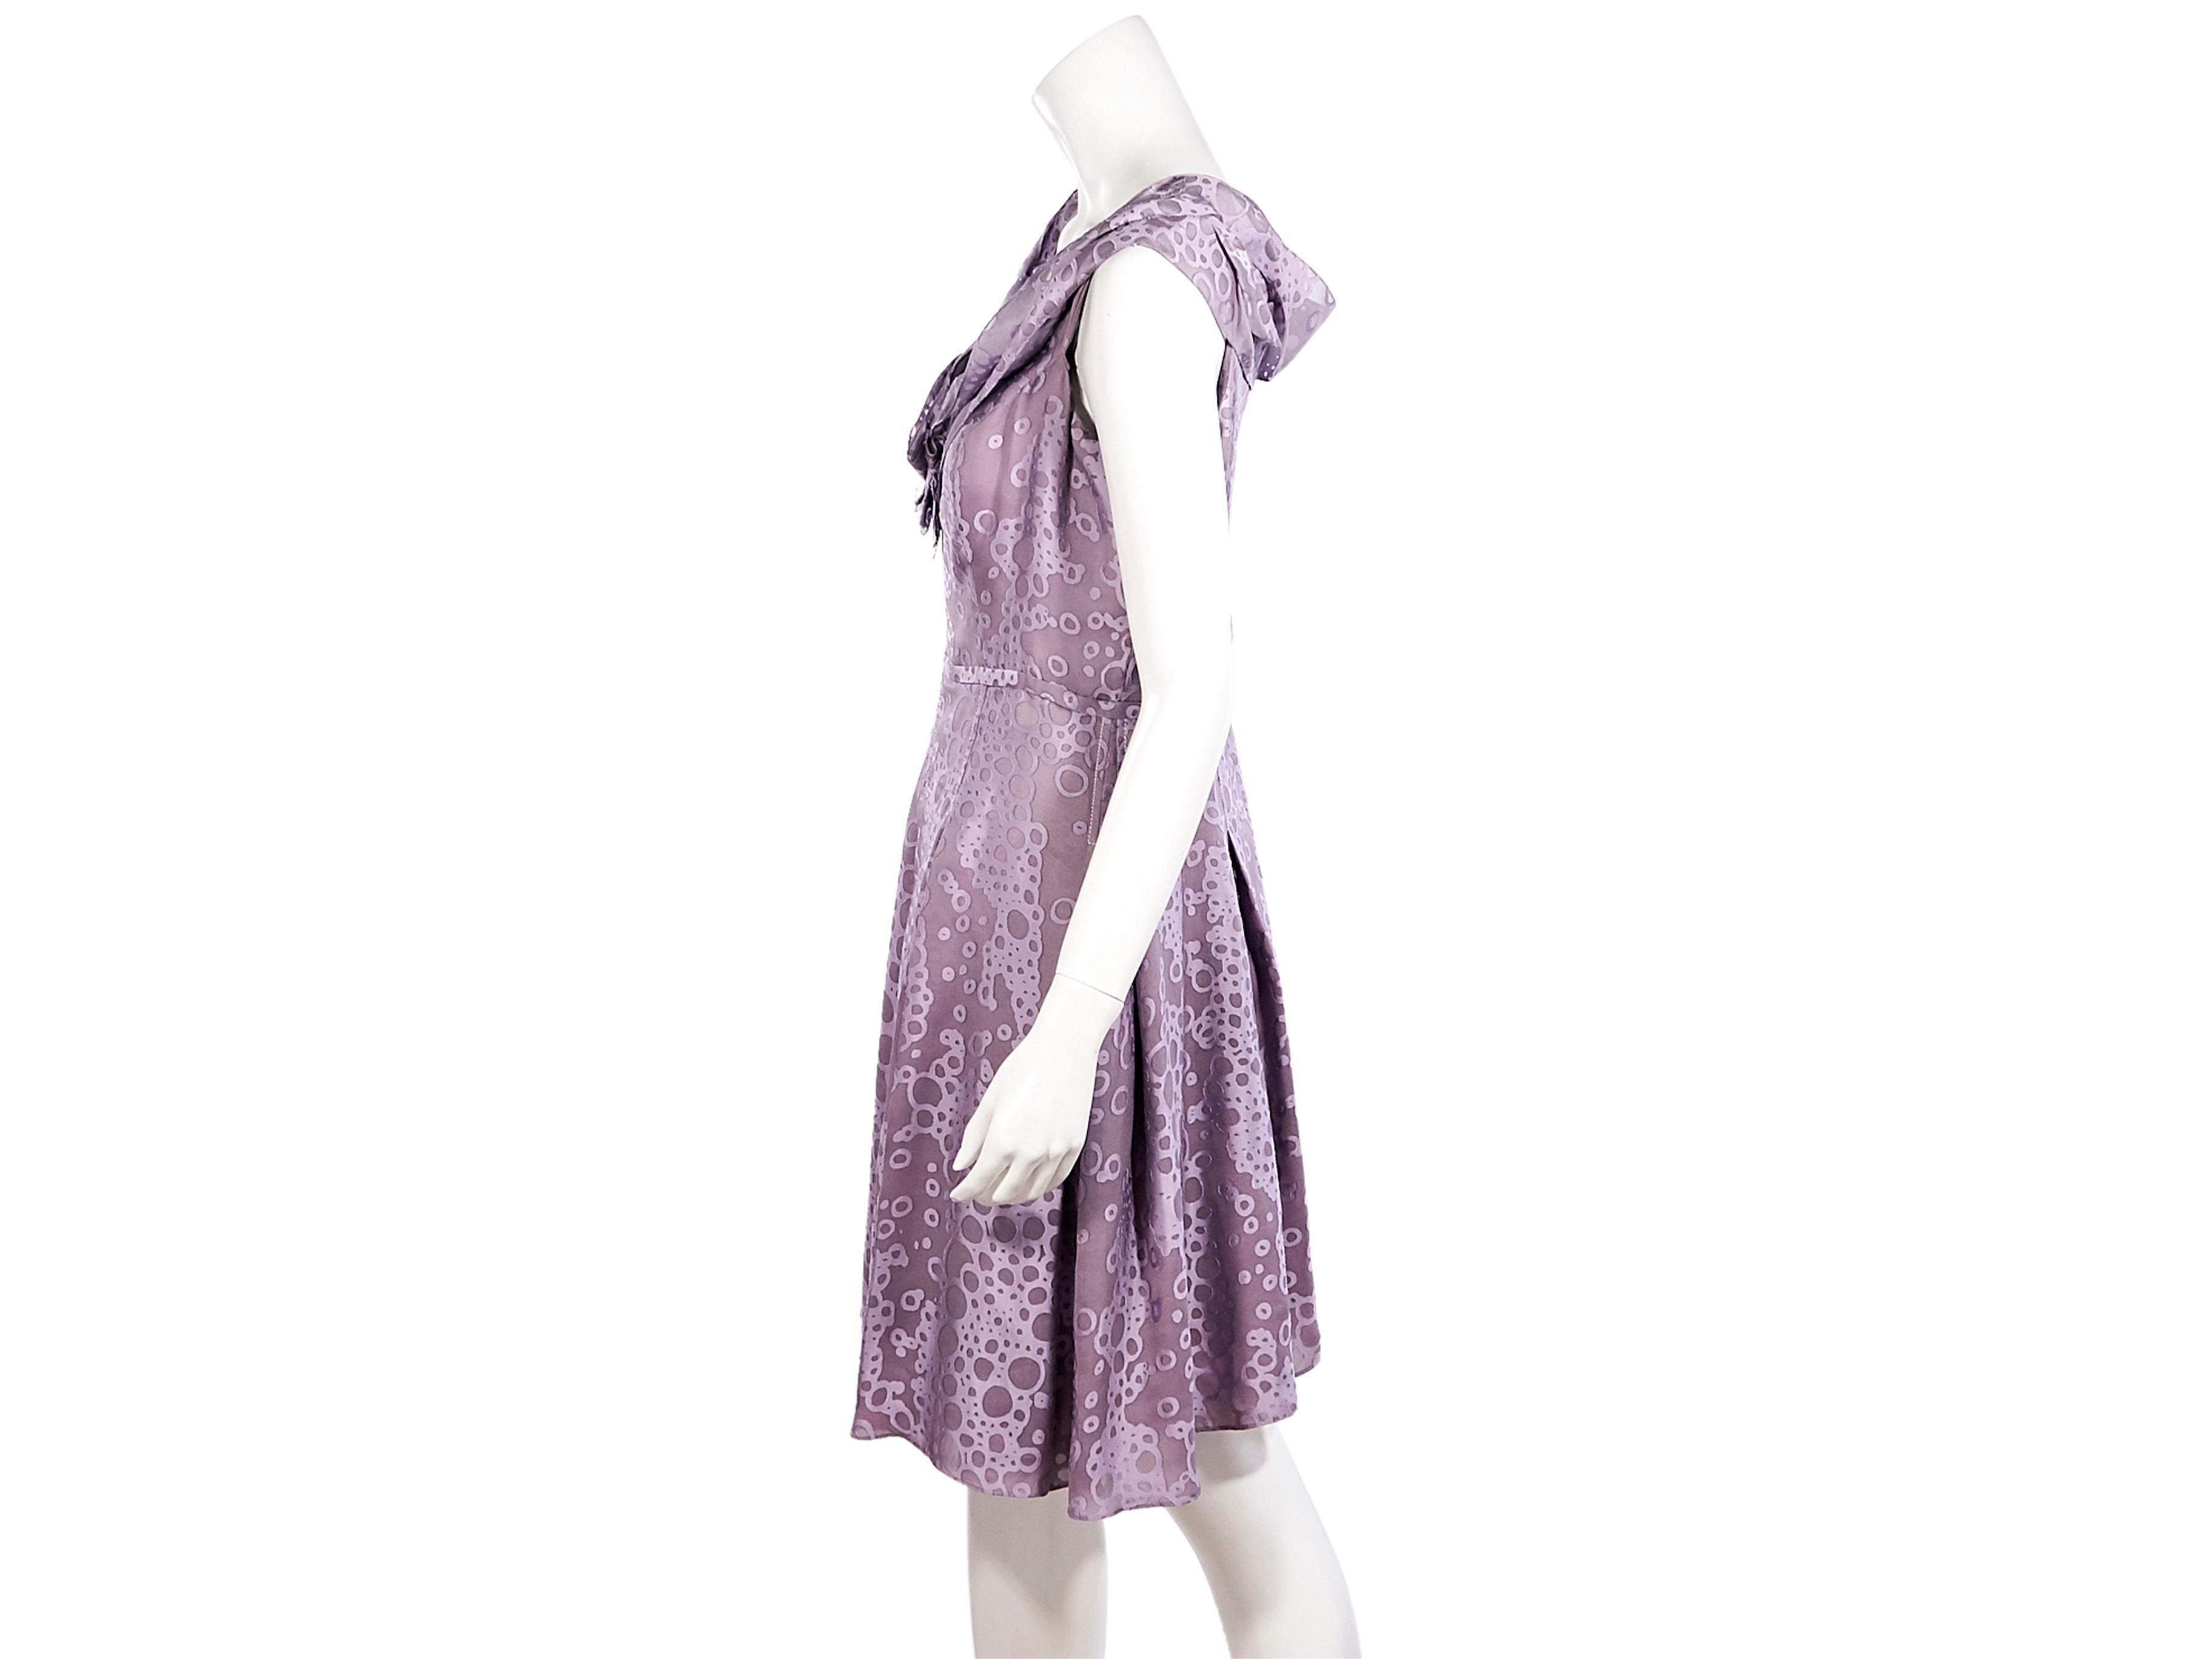 Product details:  Purple pleated dress by Carolina Herrera.  Scoopneck.  Sleeveless.  Banded waist.  Concealed back zip closure.  38